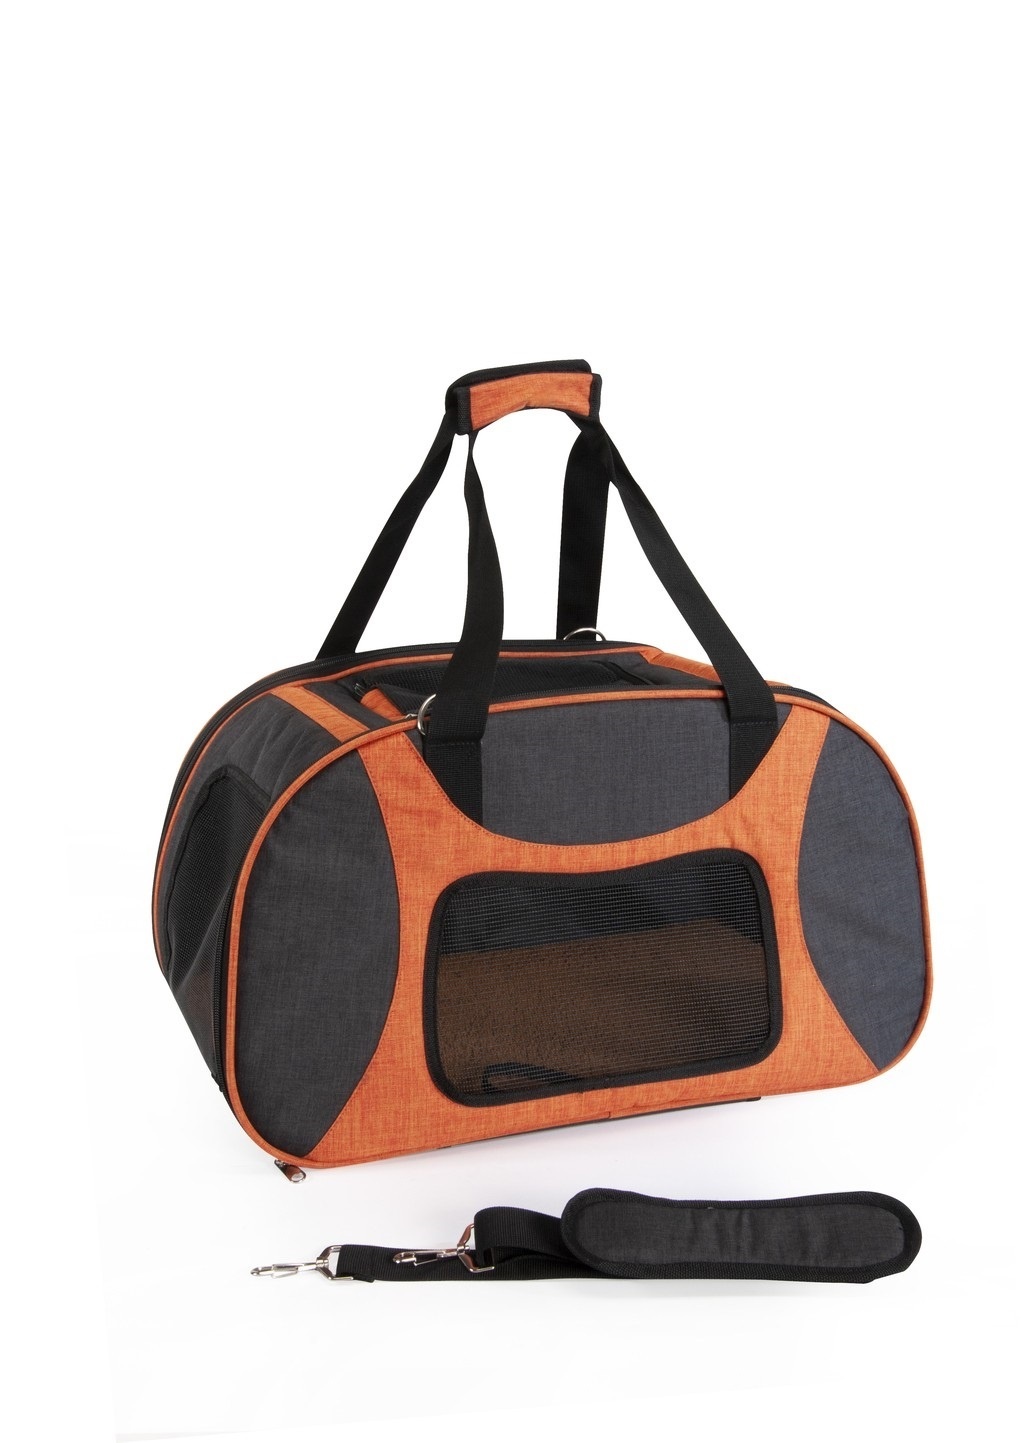 Camon Camon сумка-переноска со съёмной тележкой, 53x31x31 см (3,32 кг) camon camon рюкзак переноска pet голубая 27x24x42 см 812 г